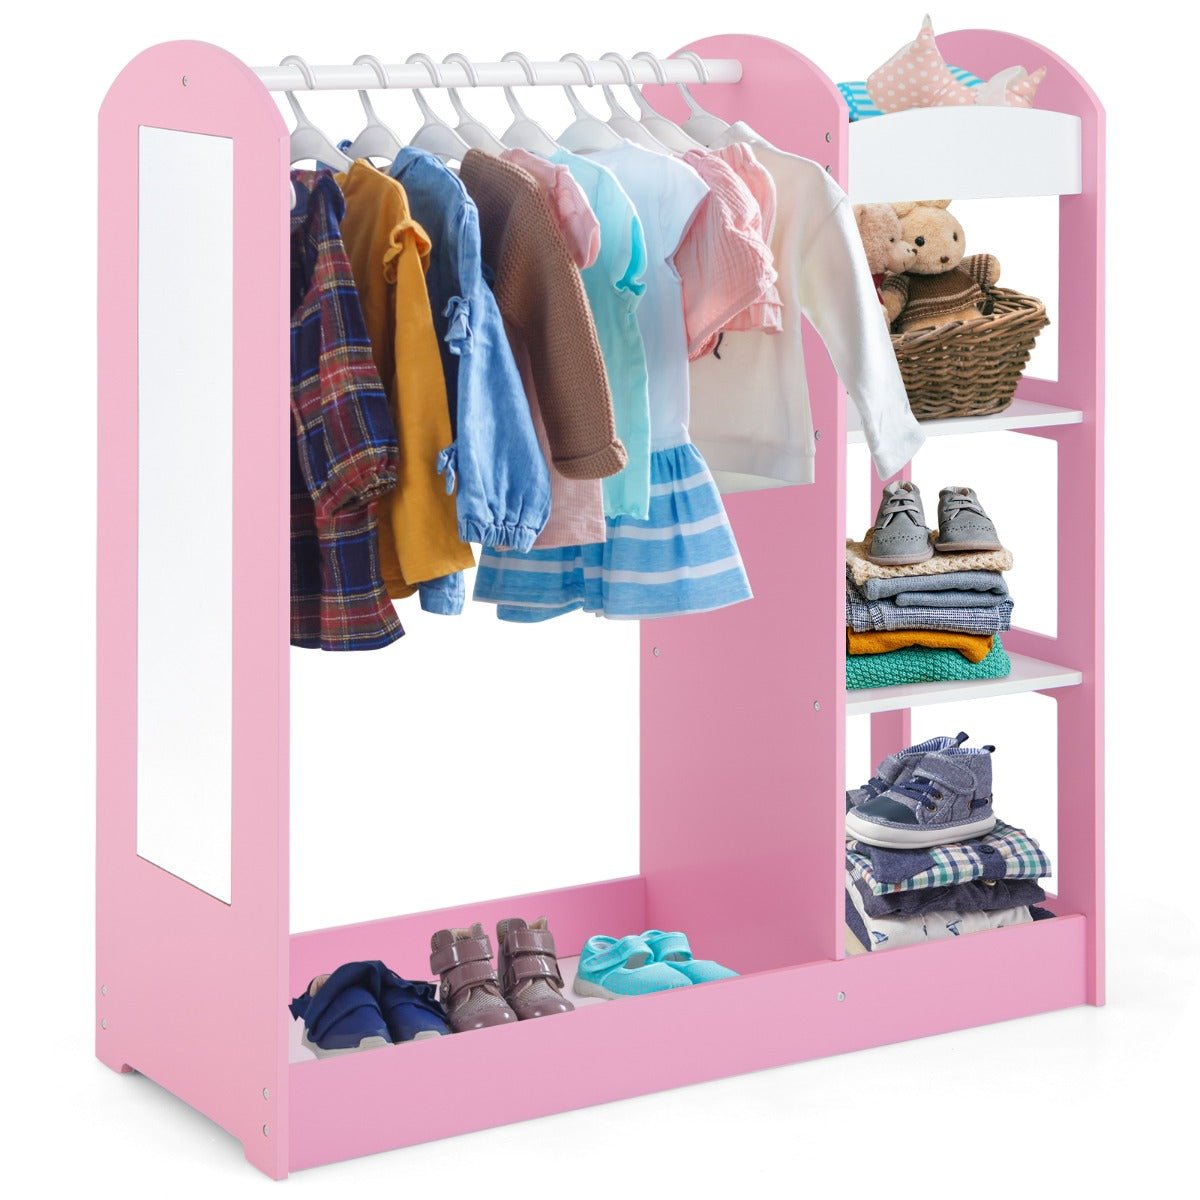 Shop Pink Kids Dress Up Storage with Mirror - Playtime Organized!